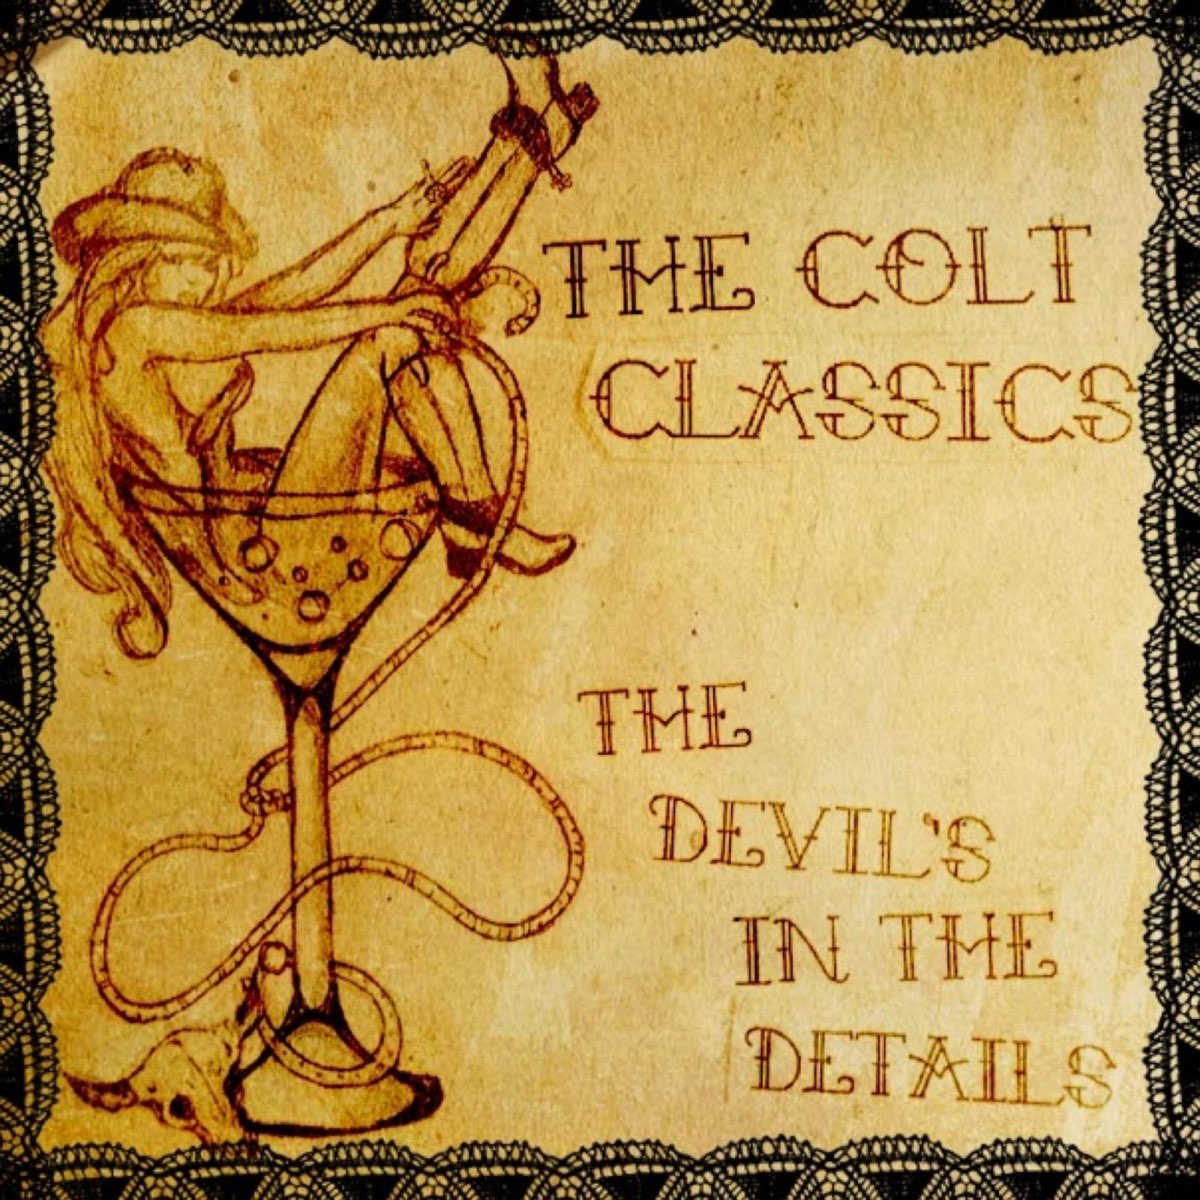 Devil's details. Devil in details. JT Music the details in the Devil. Devil in the details